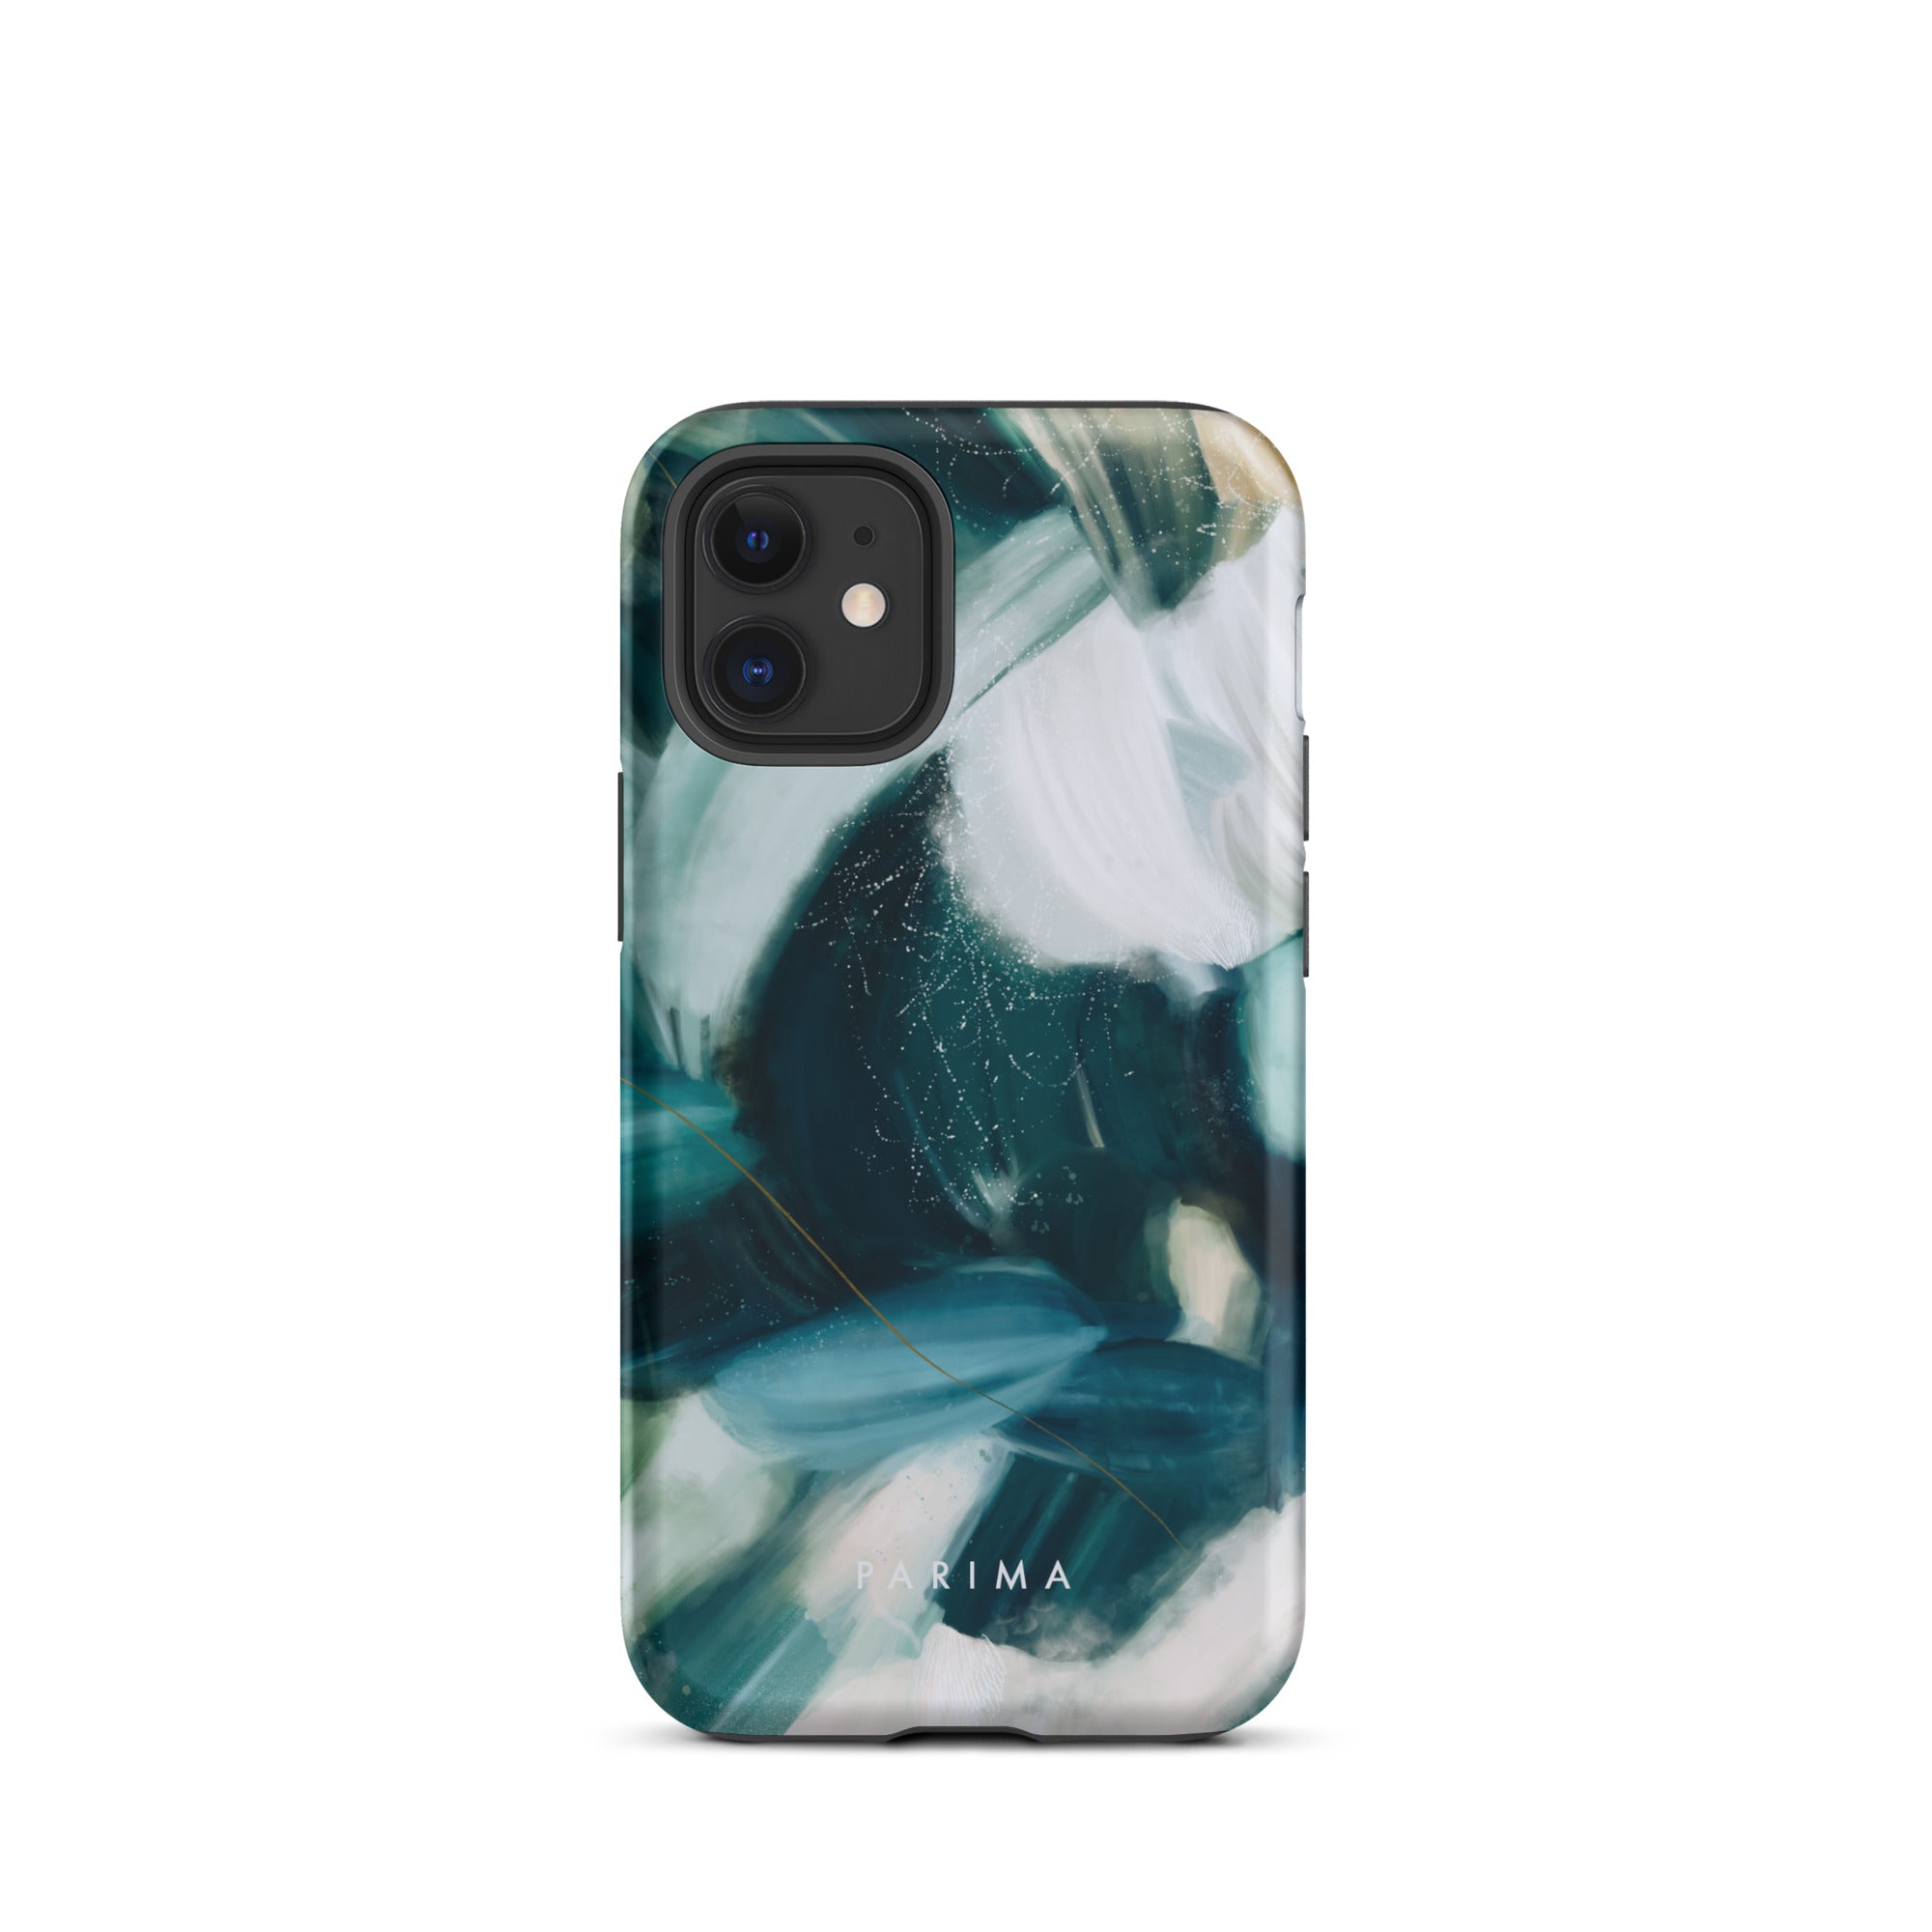 Caspian, green and blue abstract art - iPhone 12 Mini tough case by Parima Studio